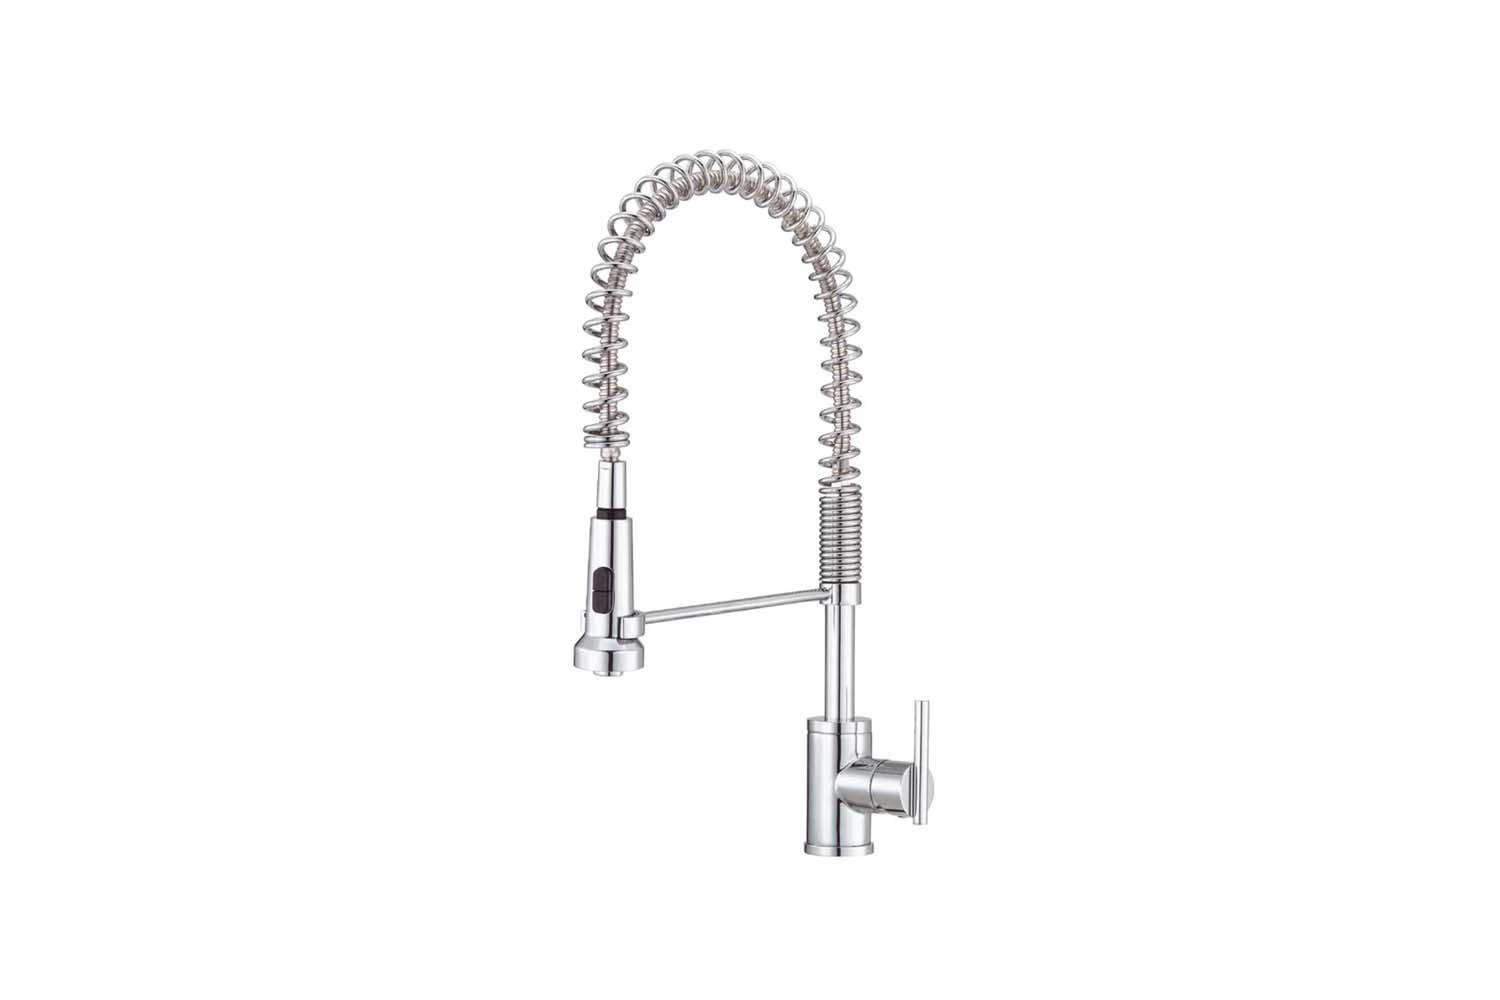 the danze parma single handle pre rinse faucet has a long spout with a spring a 16